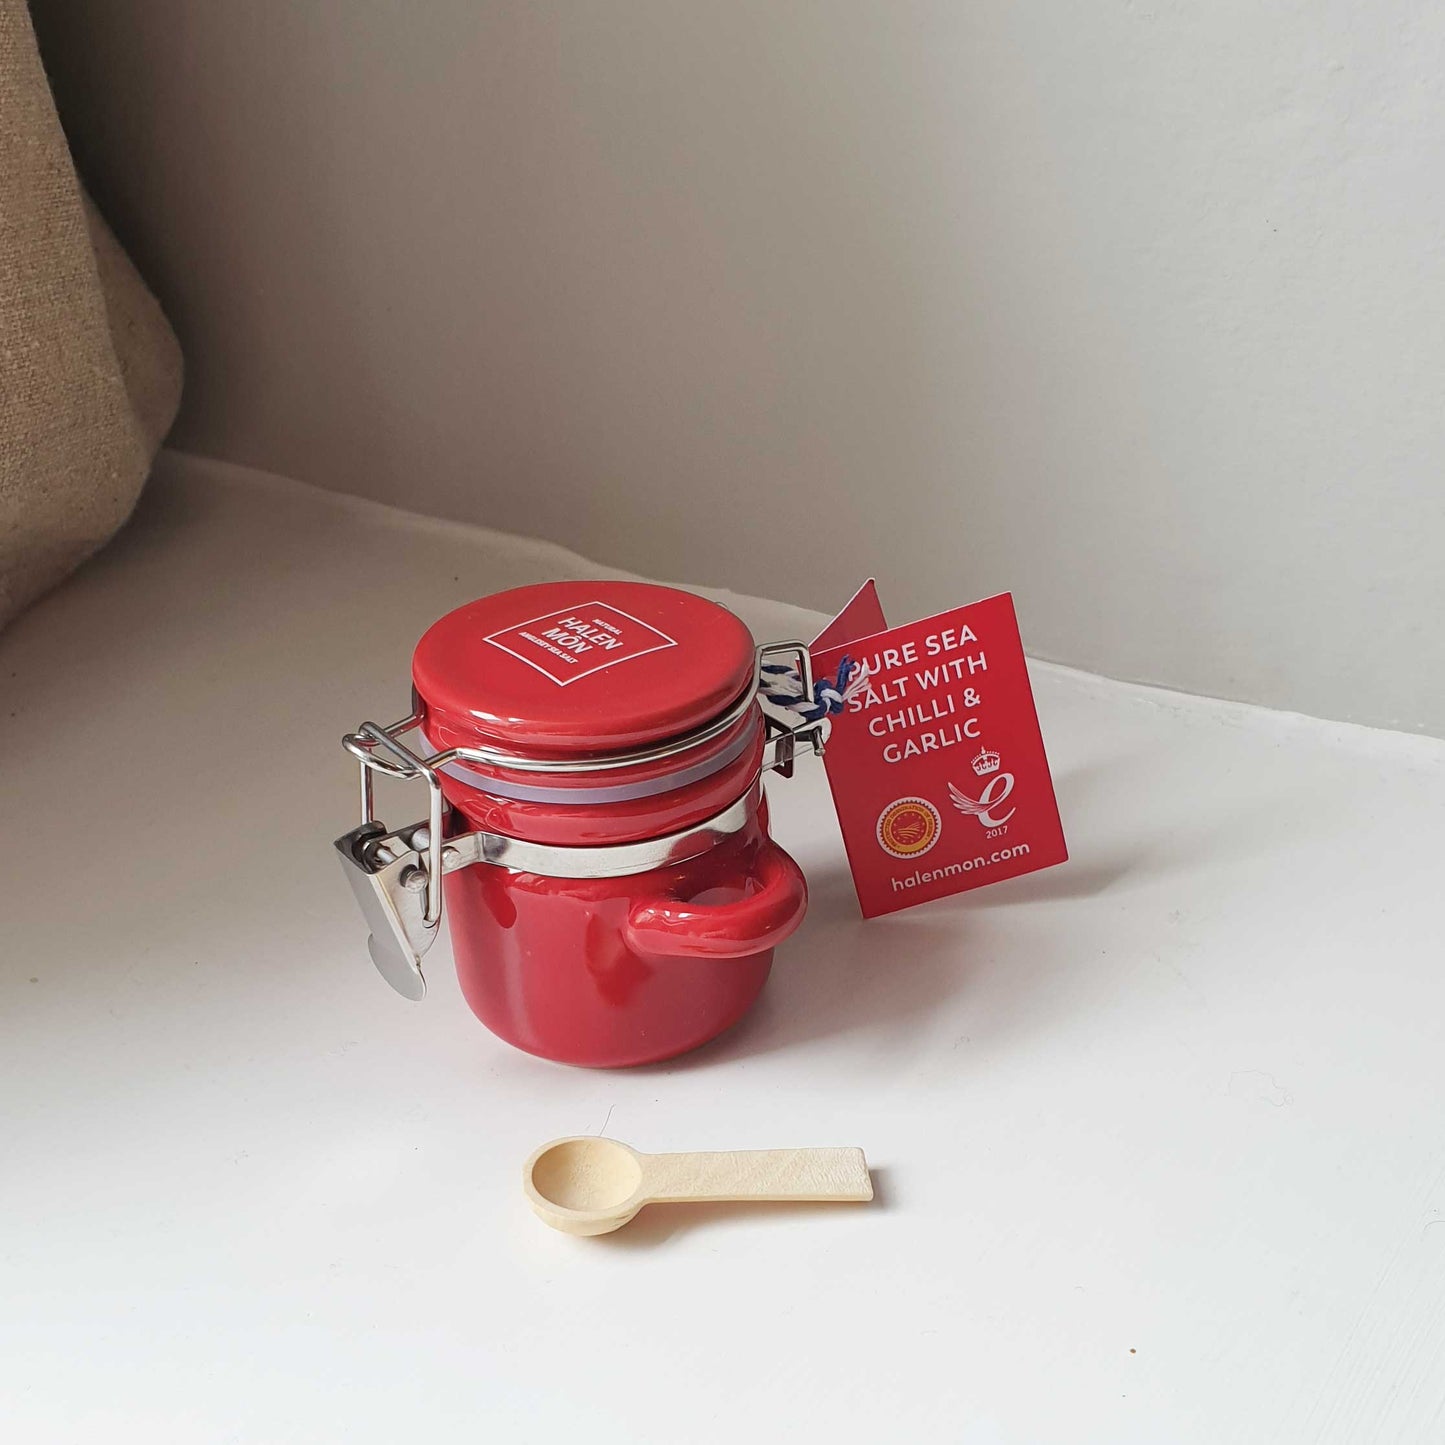 Red Ceramic Jar with Chilli and Garlic Sea Salt by Halen Mon